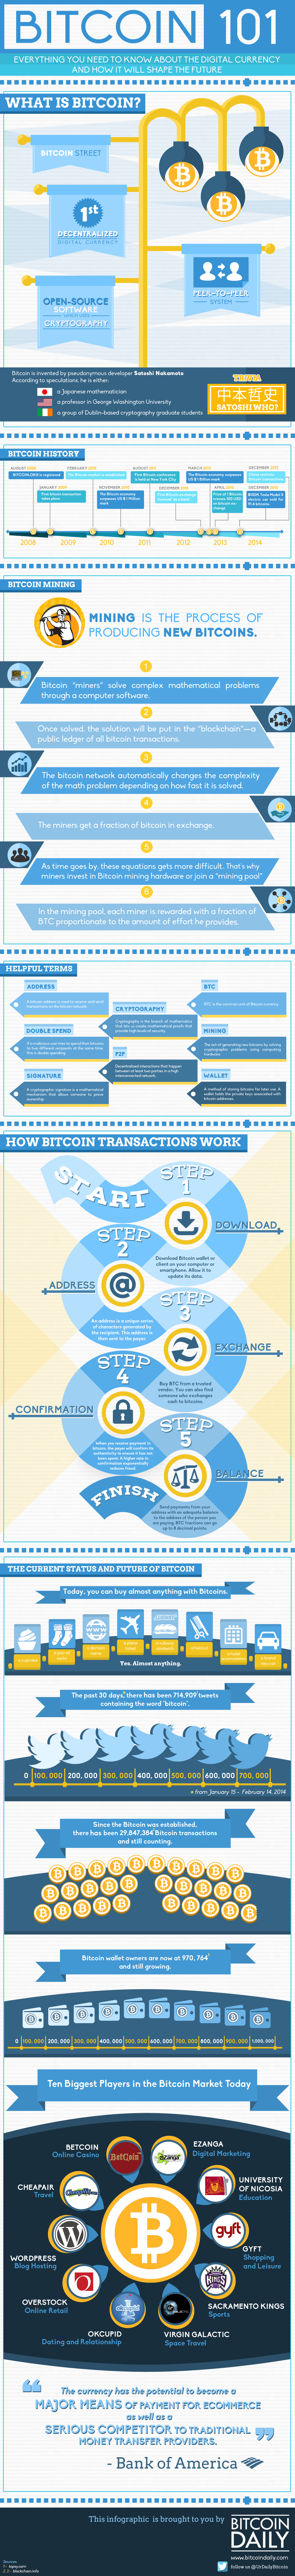 Bitcoin-Daily-Bitcoin-101-Infographic.jpg